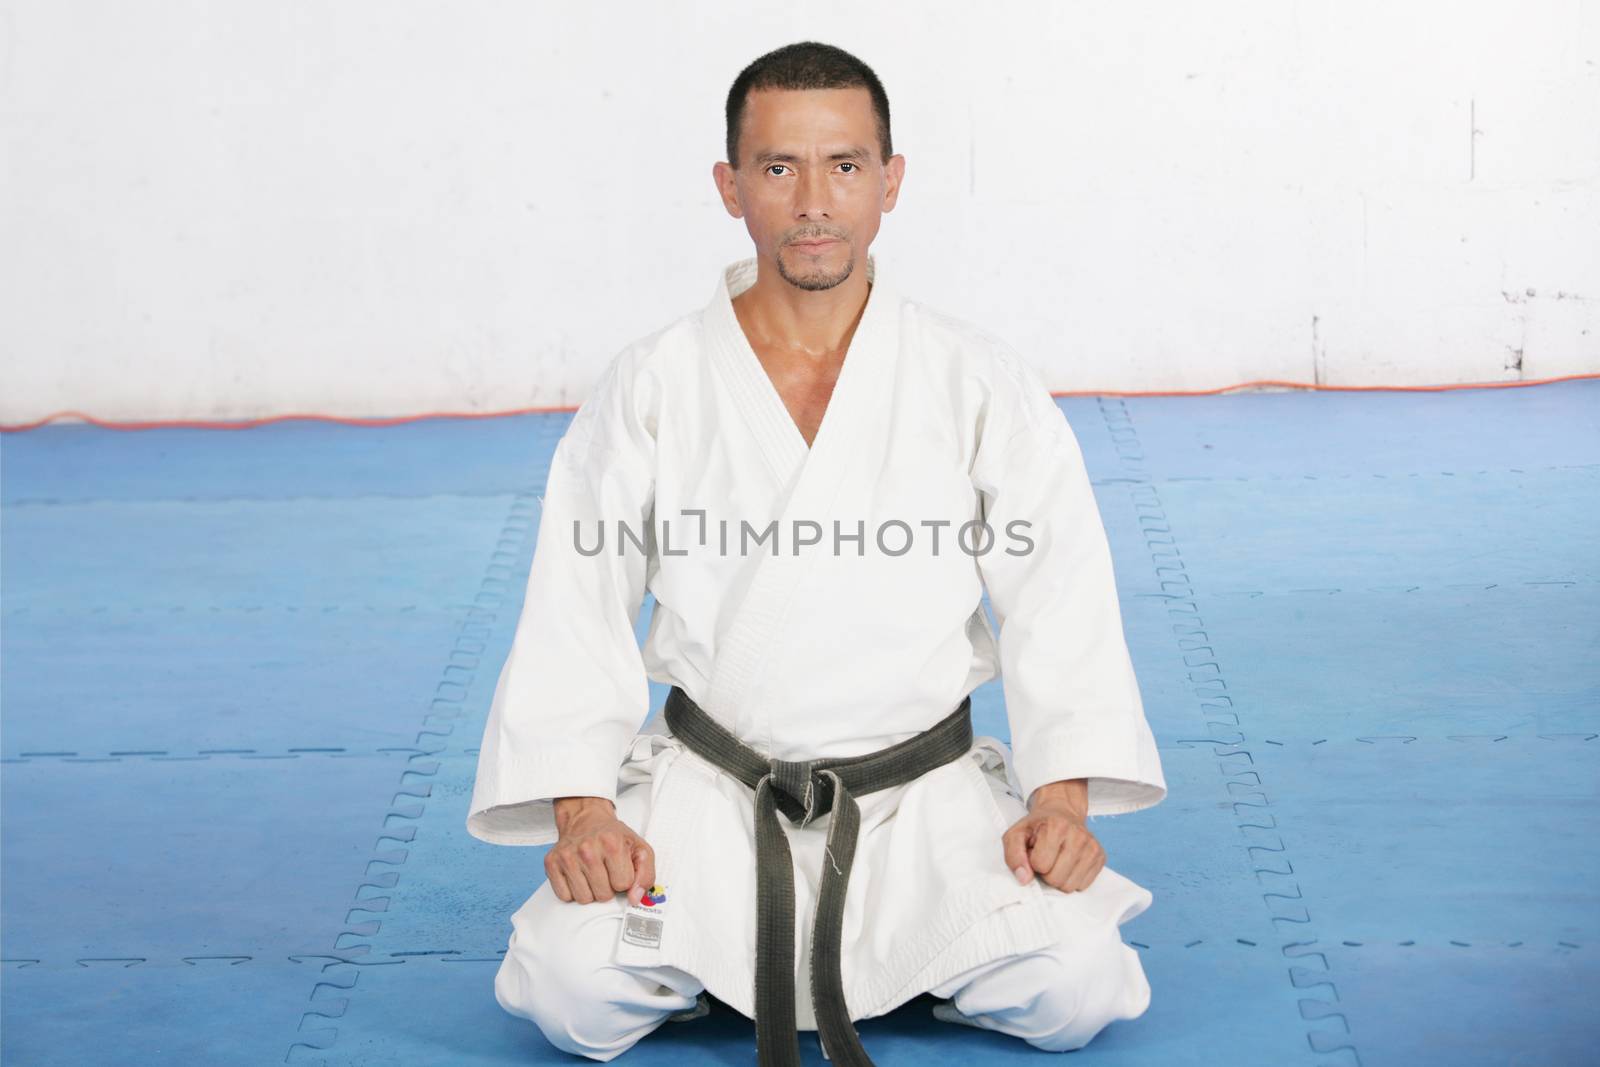 Black Belt karate man sit on a position to start or finish pract by dacasdo